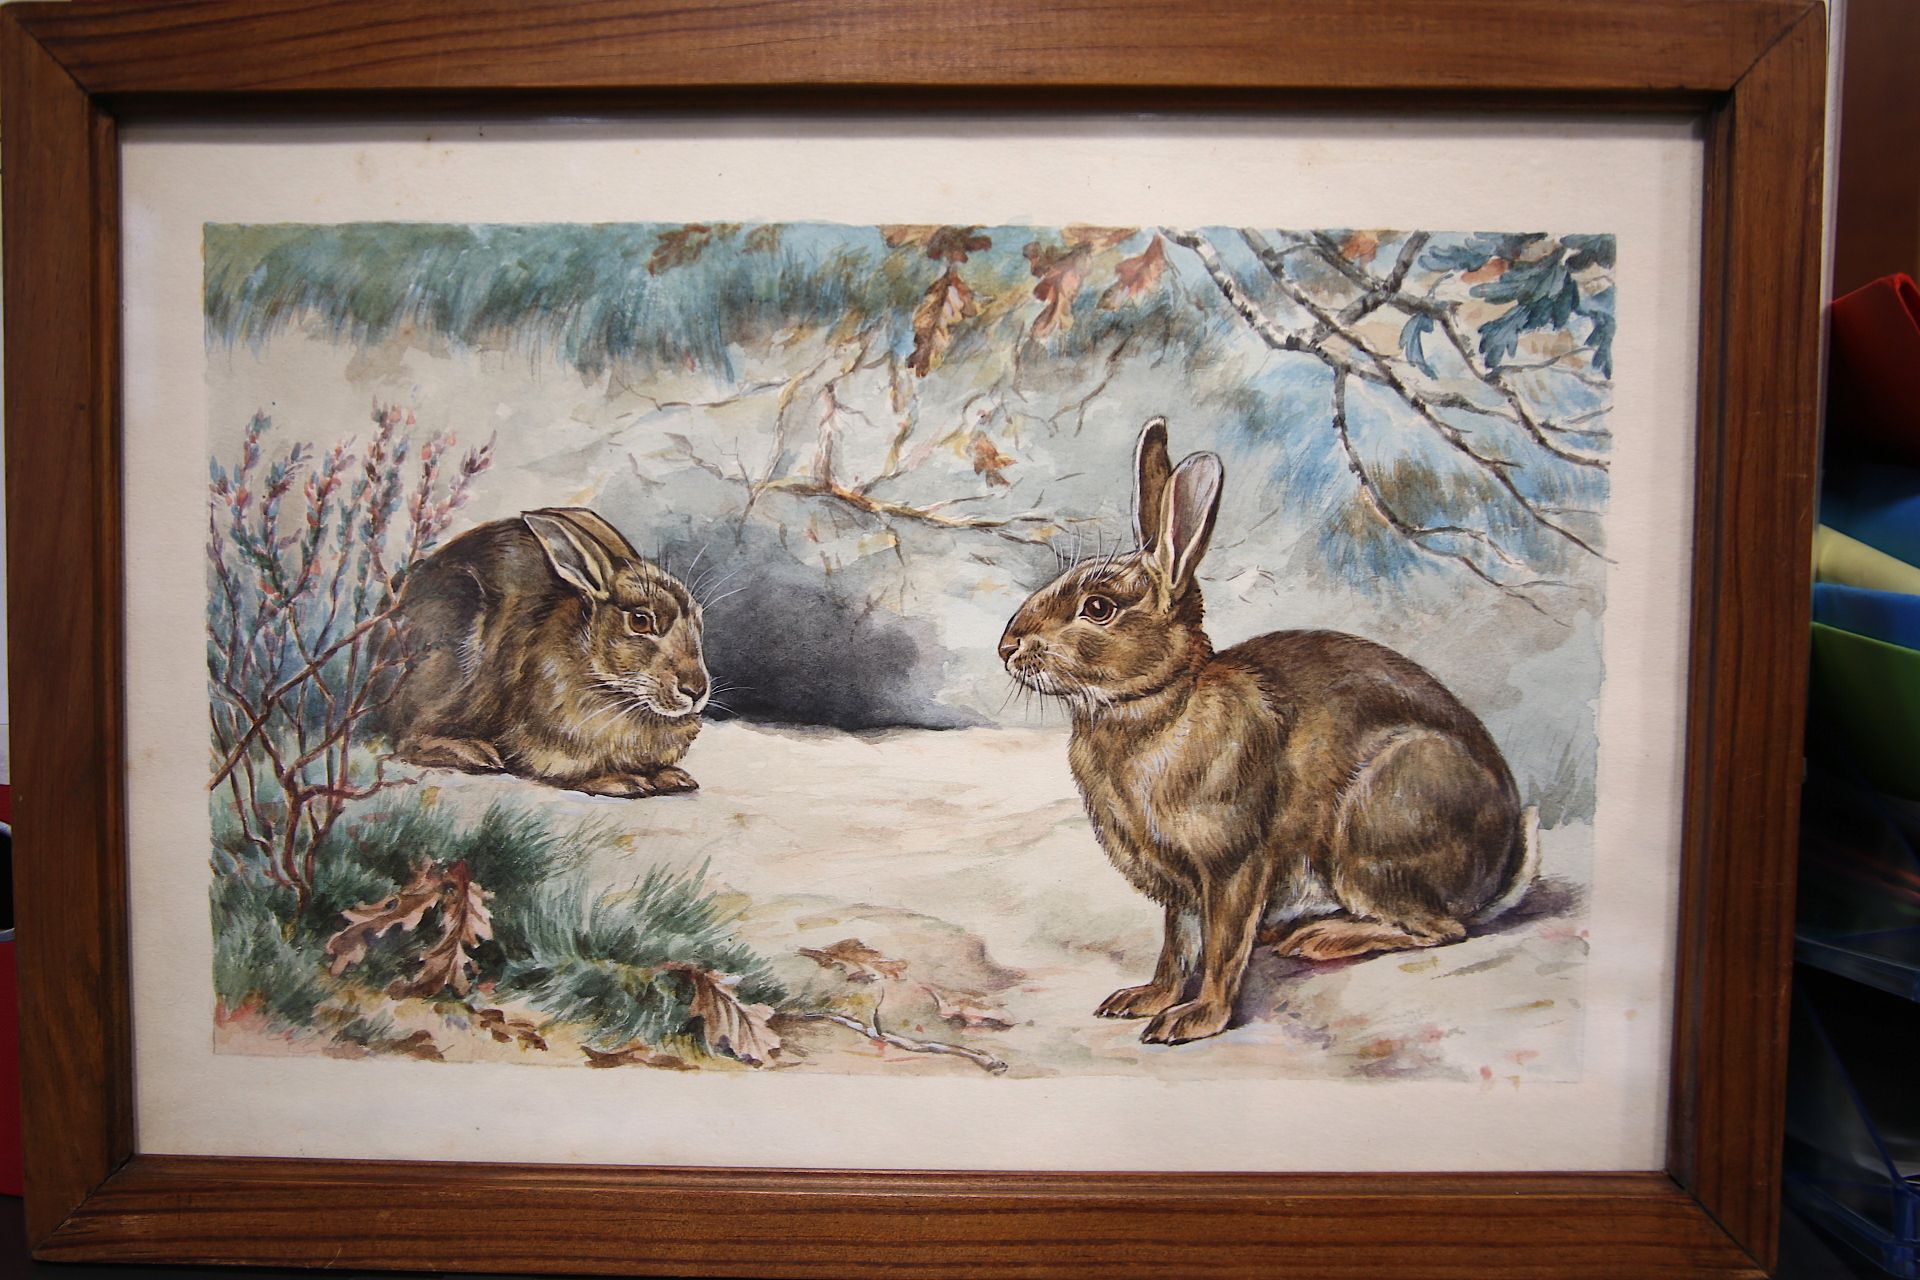 Null 
CASTELLAN atribuido a
dos conejos
témpera sin firmar
tamaño : 22,5 x 33 cm